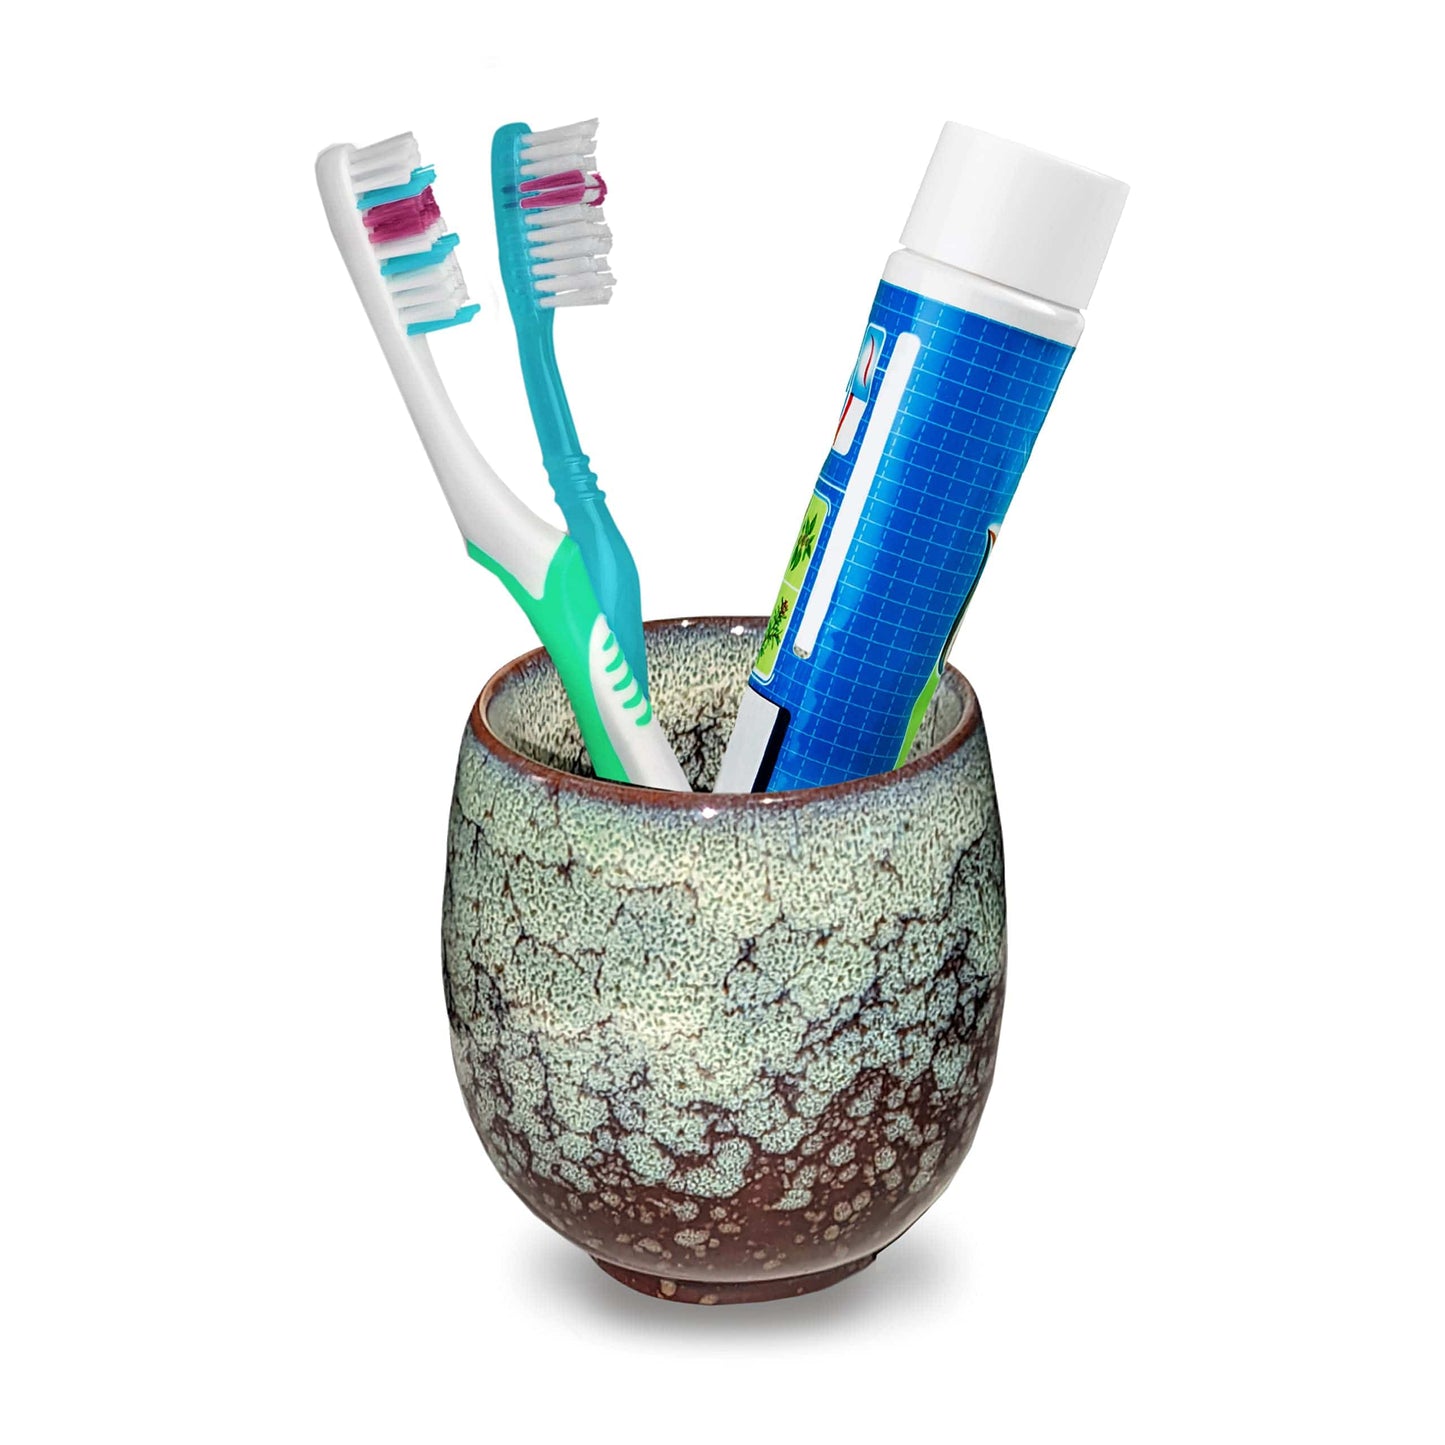 ArtOlo Toothbrush Holder Bathroom Countertop Product Organizer